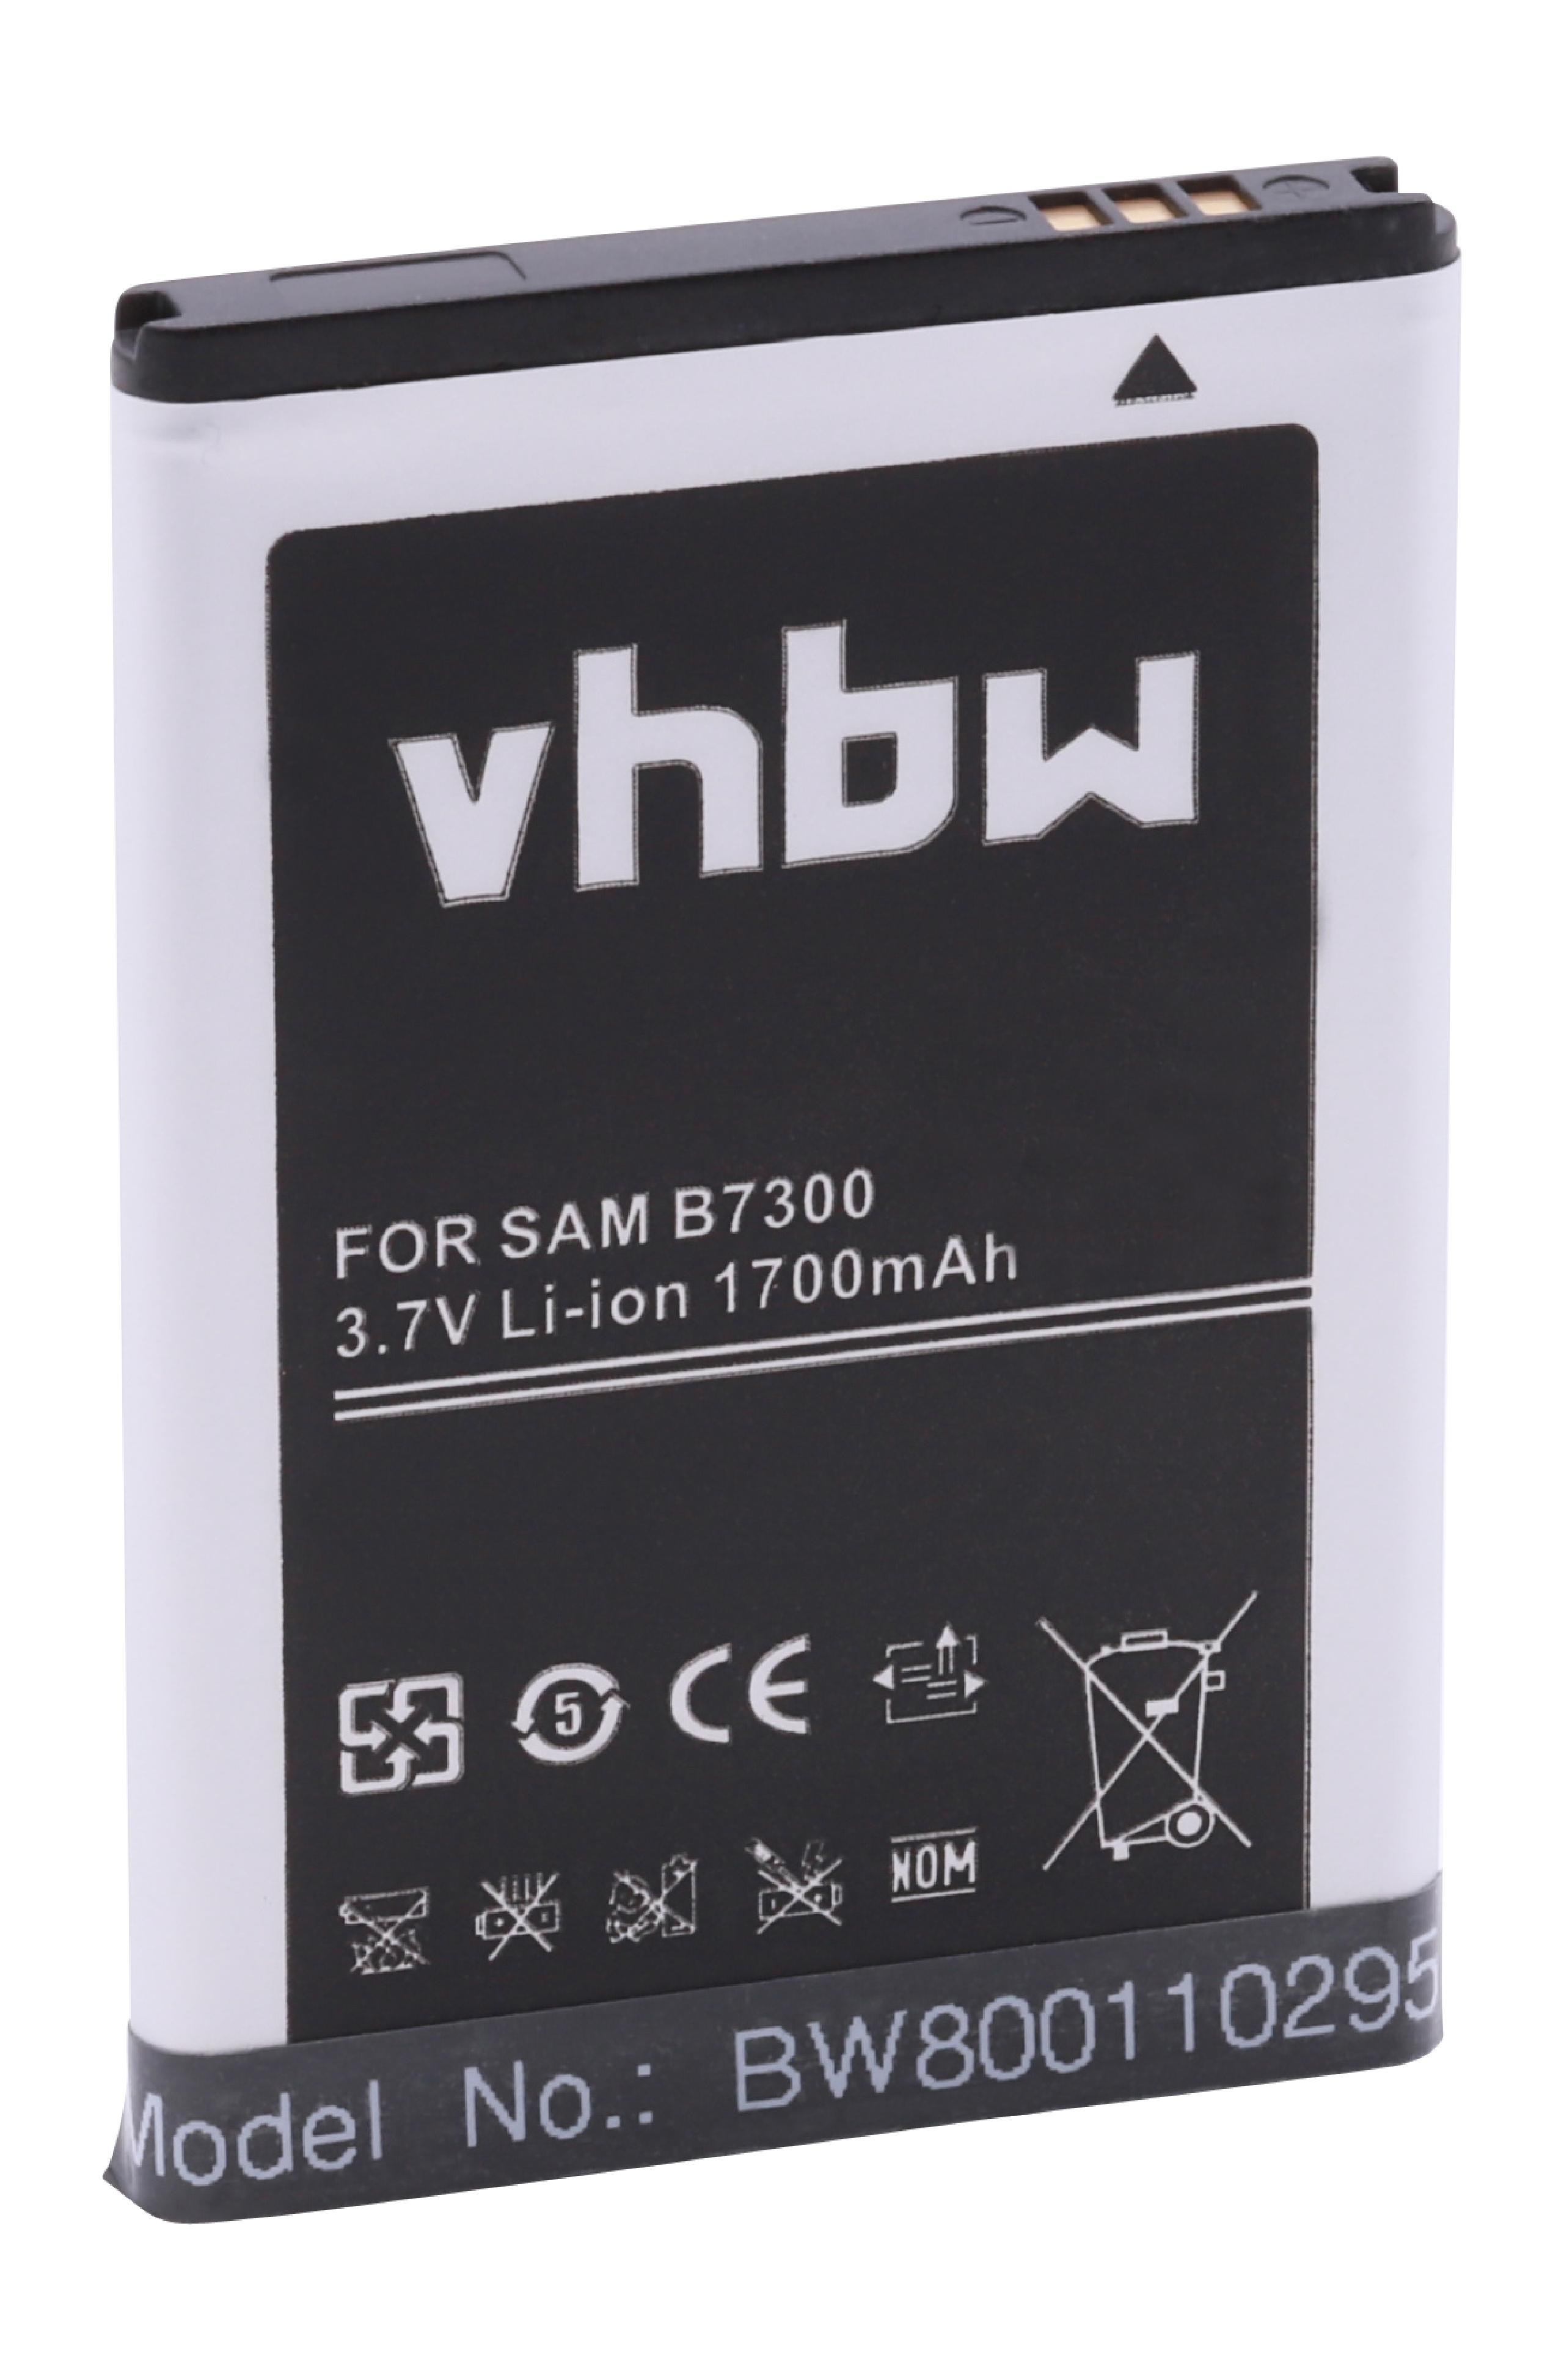 Mobile Phone Battery Replacement for Samsung EB504465LA, EB504465IZBSTD, CPLD-69 - 1700mAh 3.7V Li-Ion